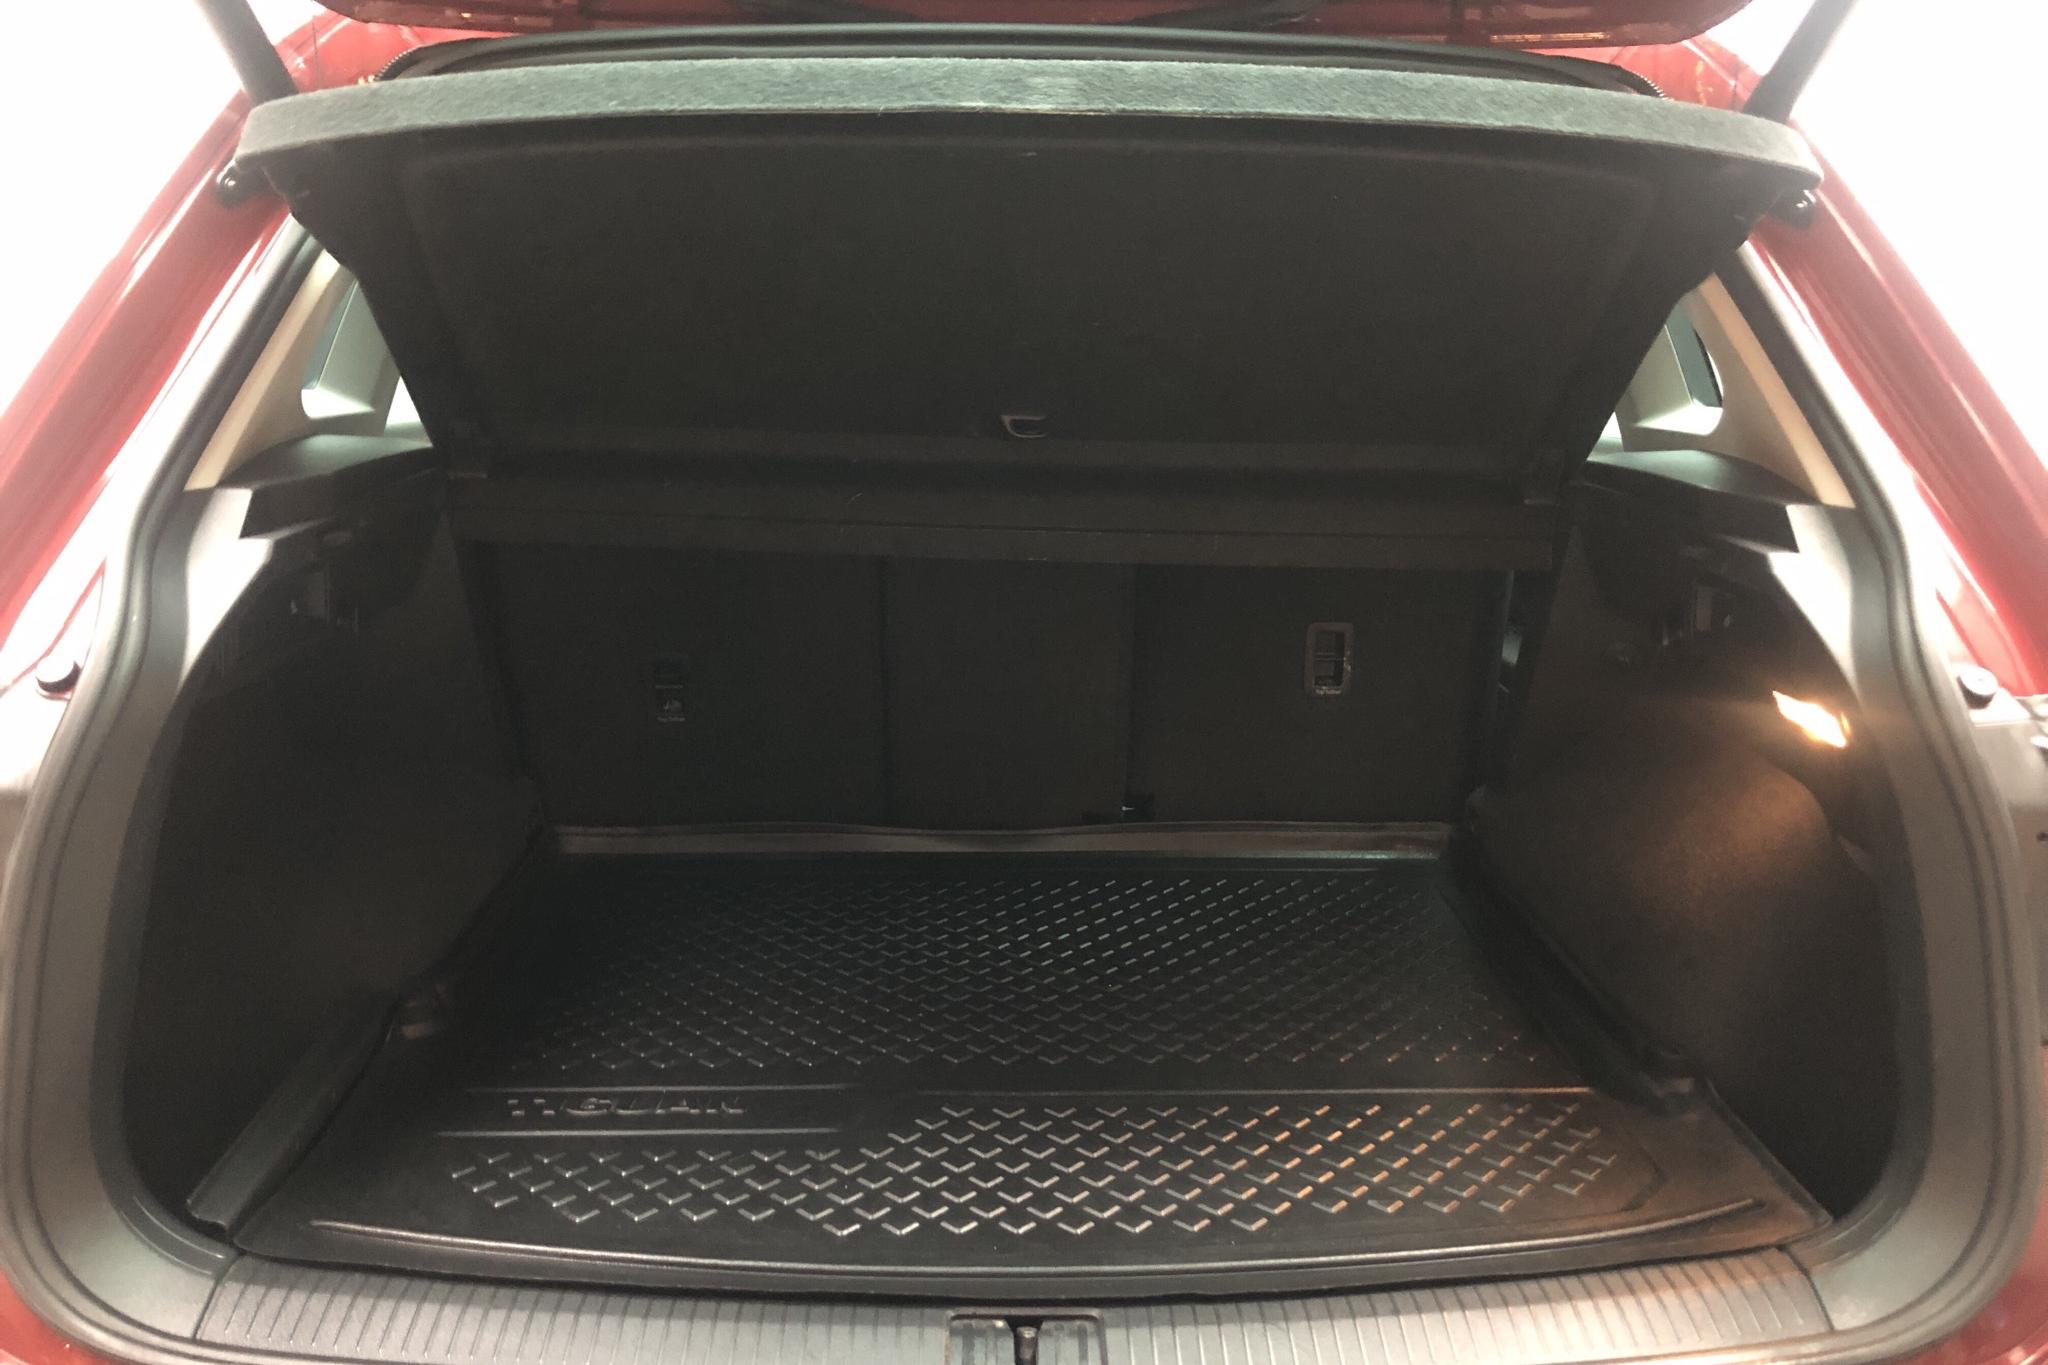 VW Tiguan 2.0 TDI 4MOTION (190hk) - 153 280 km - Automatic - Dark Red - 2018